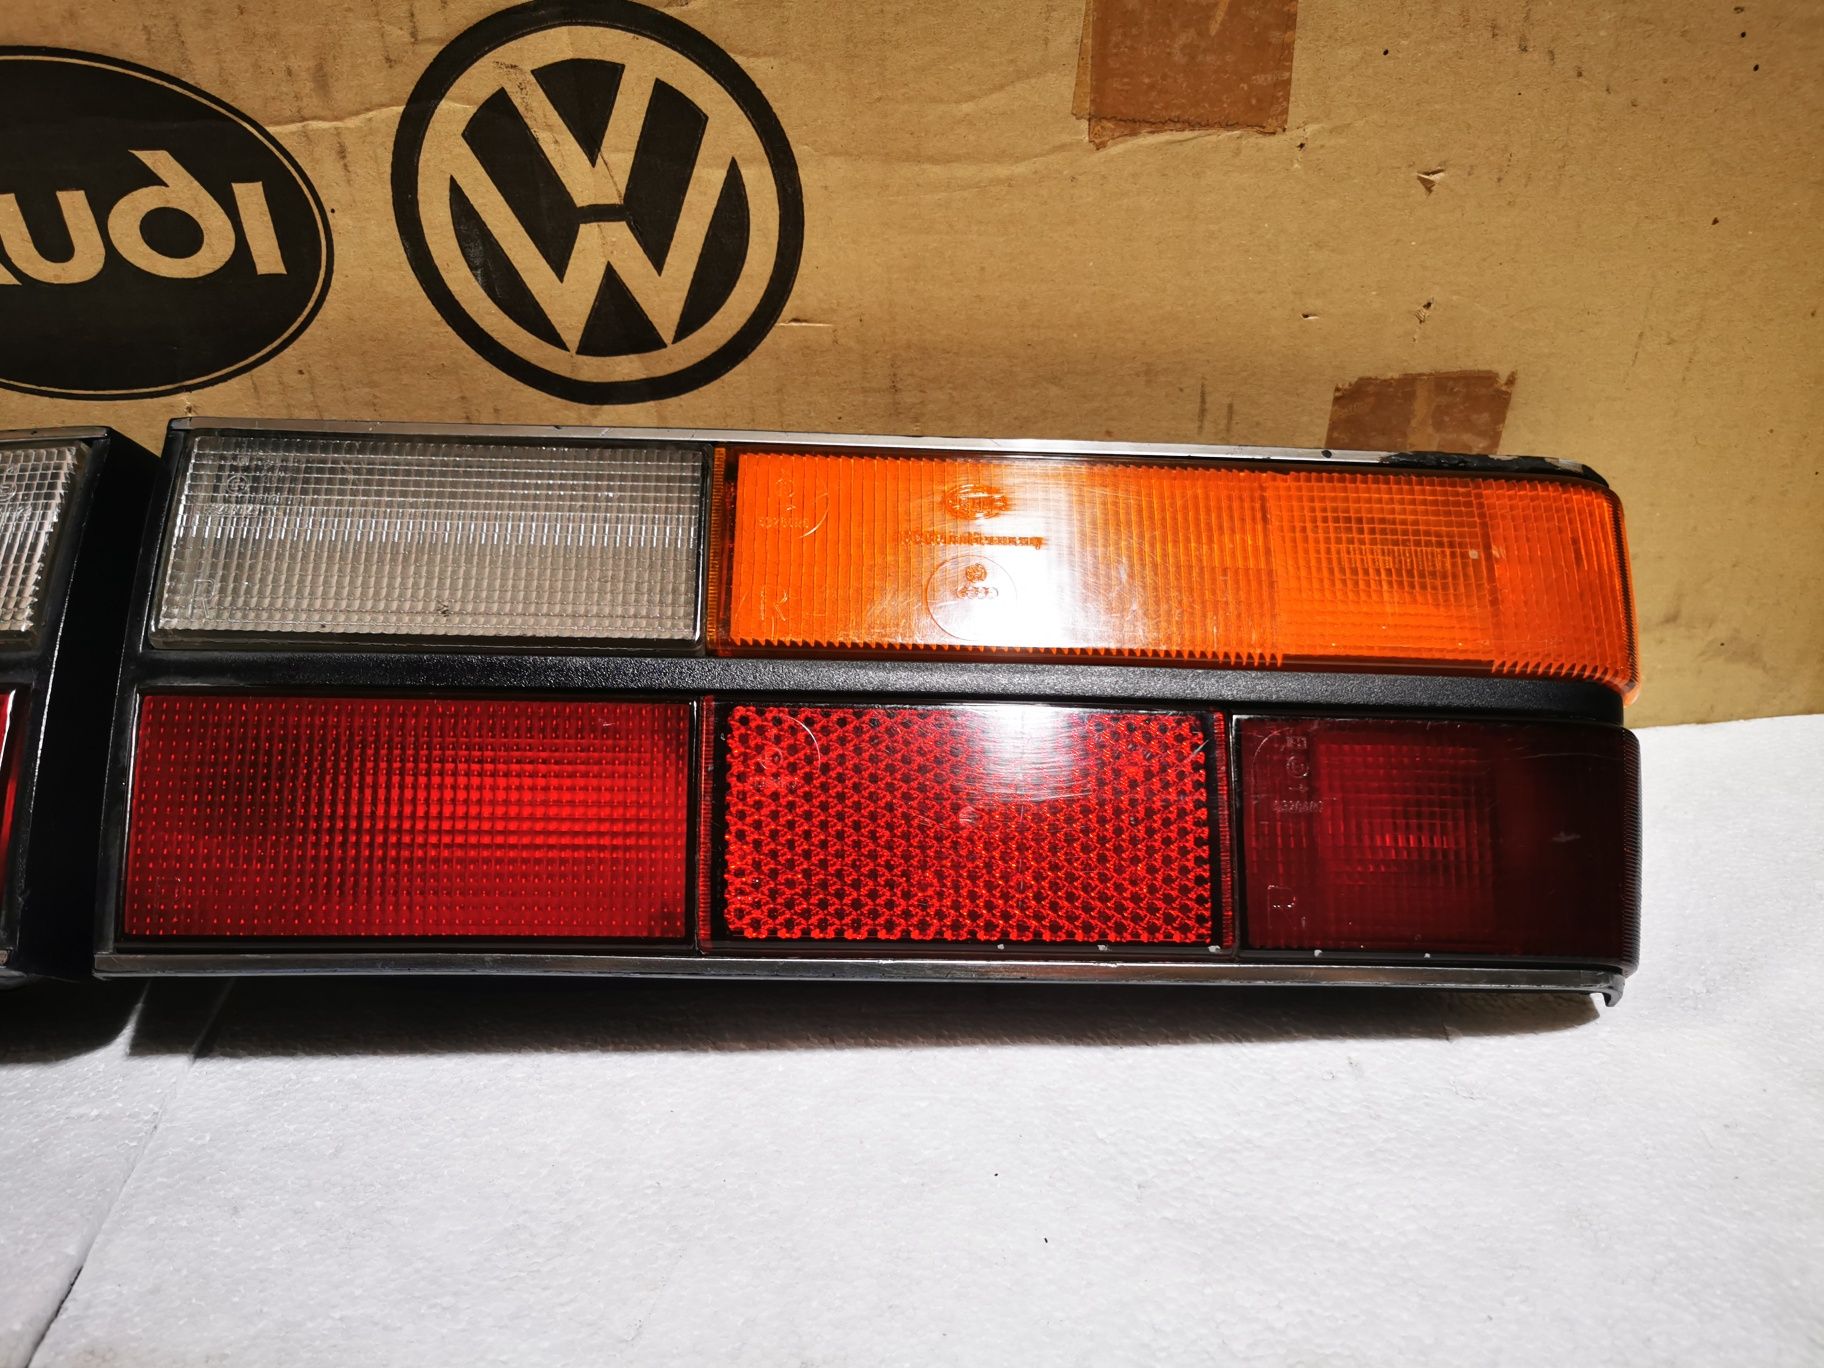 Set stopuri originale Hella Audi 100 C2 1976 - 1982
Stare buna